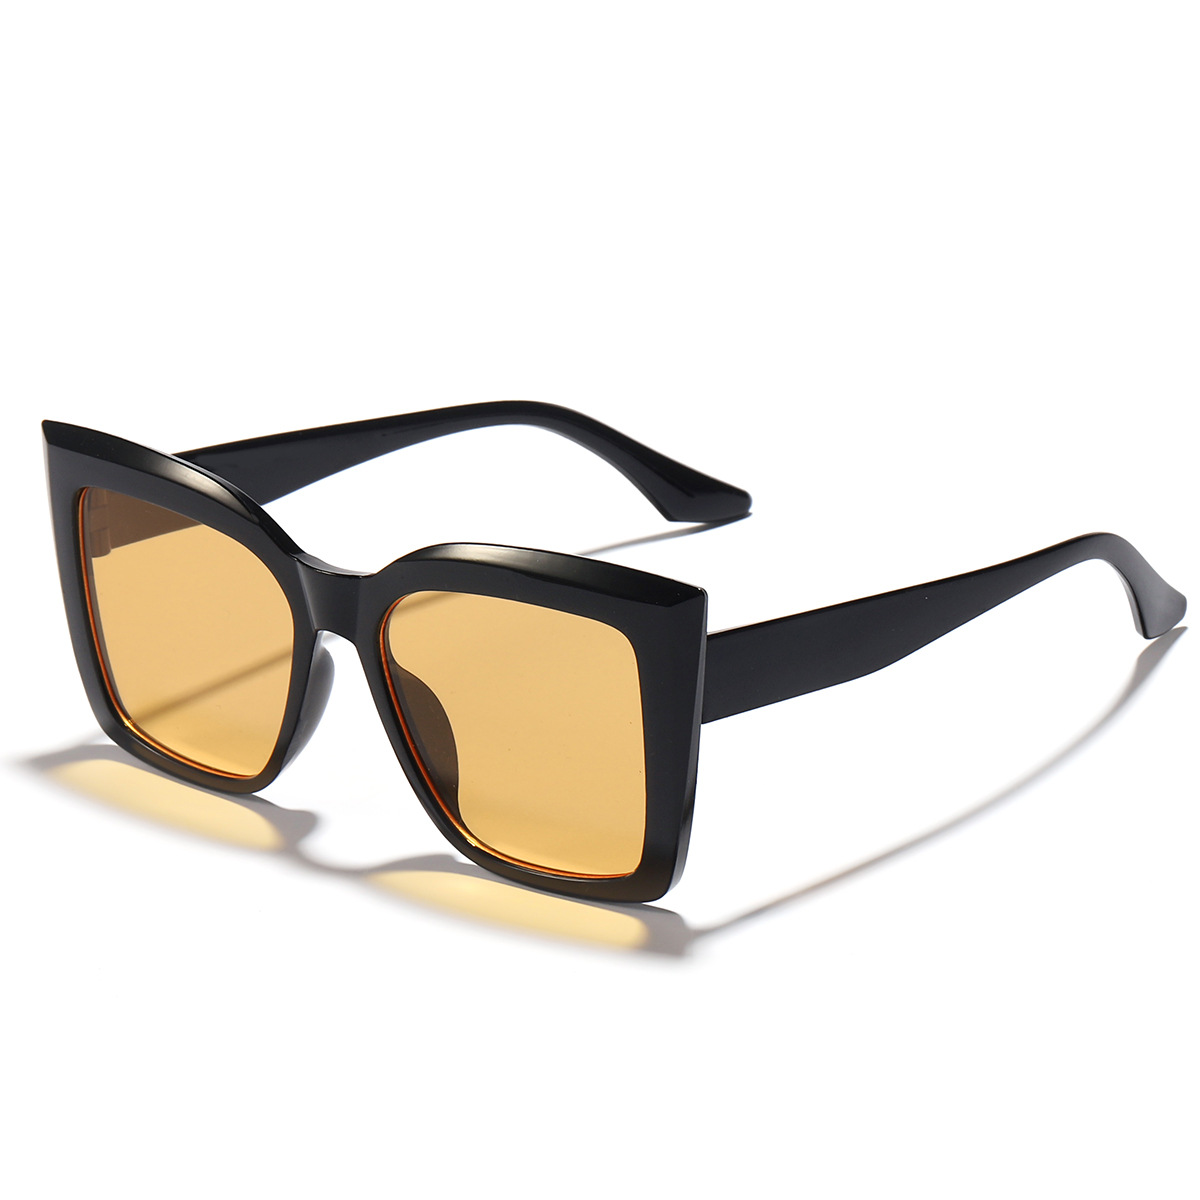 Big Square Rim Cats' Eye Sunglasses Women's Super Personality Fashion European and American Fashion Sunglasses UV Protection Sunglasses